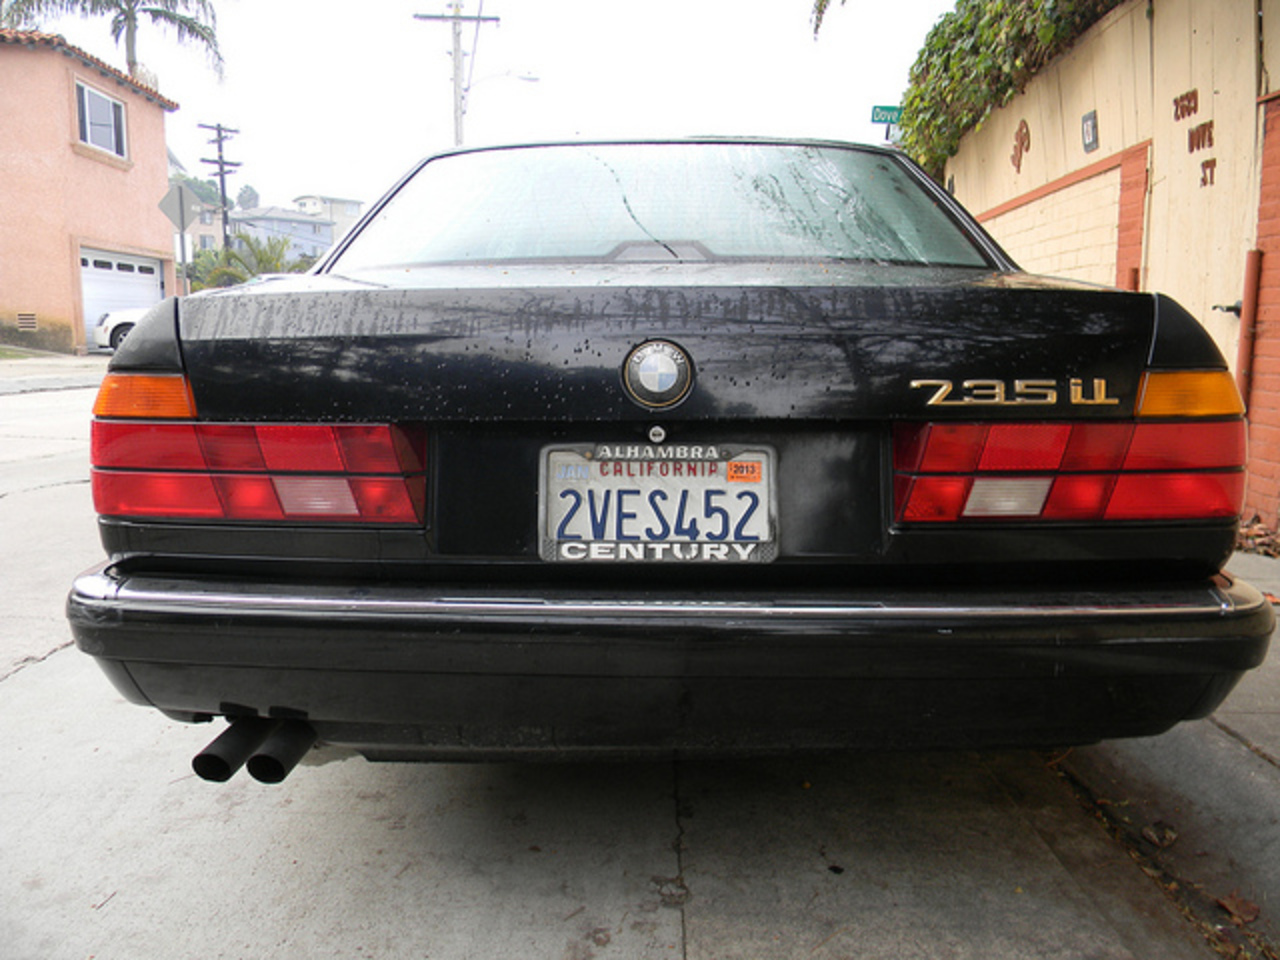 1990 BMW 735il | Flickr - Photo Sharing!